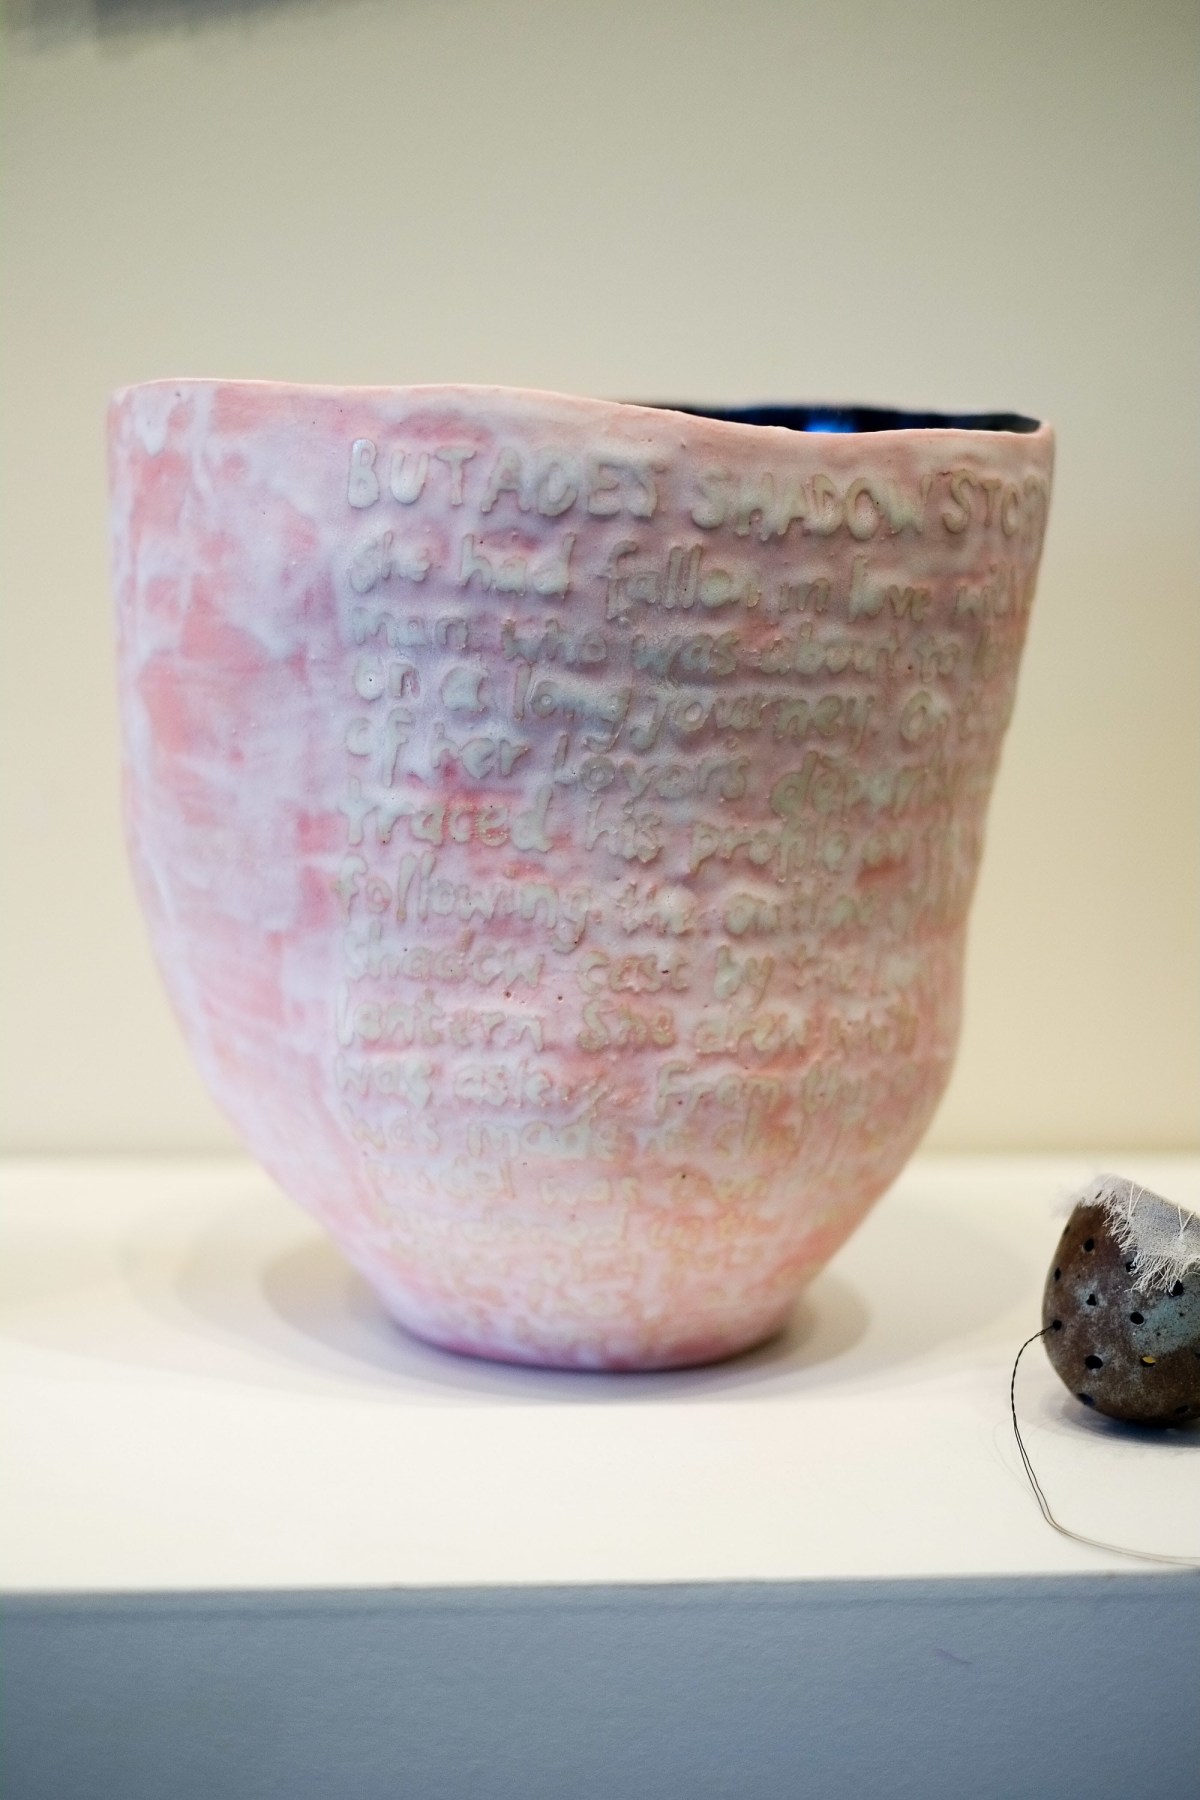 Amanda Humphries, Butades Shadow Vessel, Water-etched stoneware